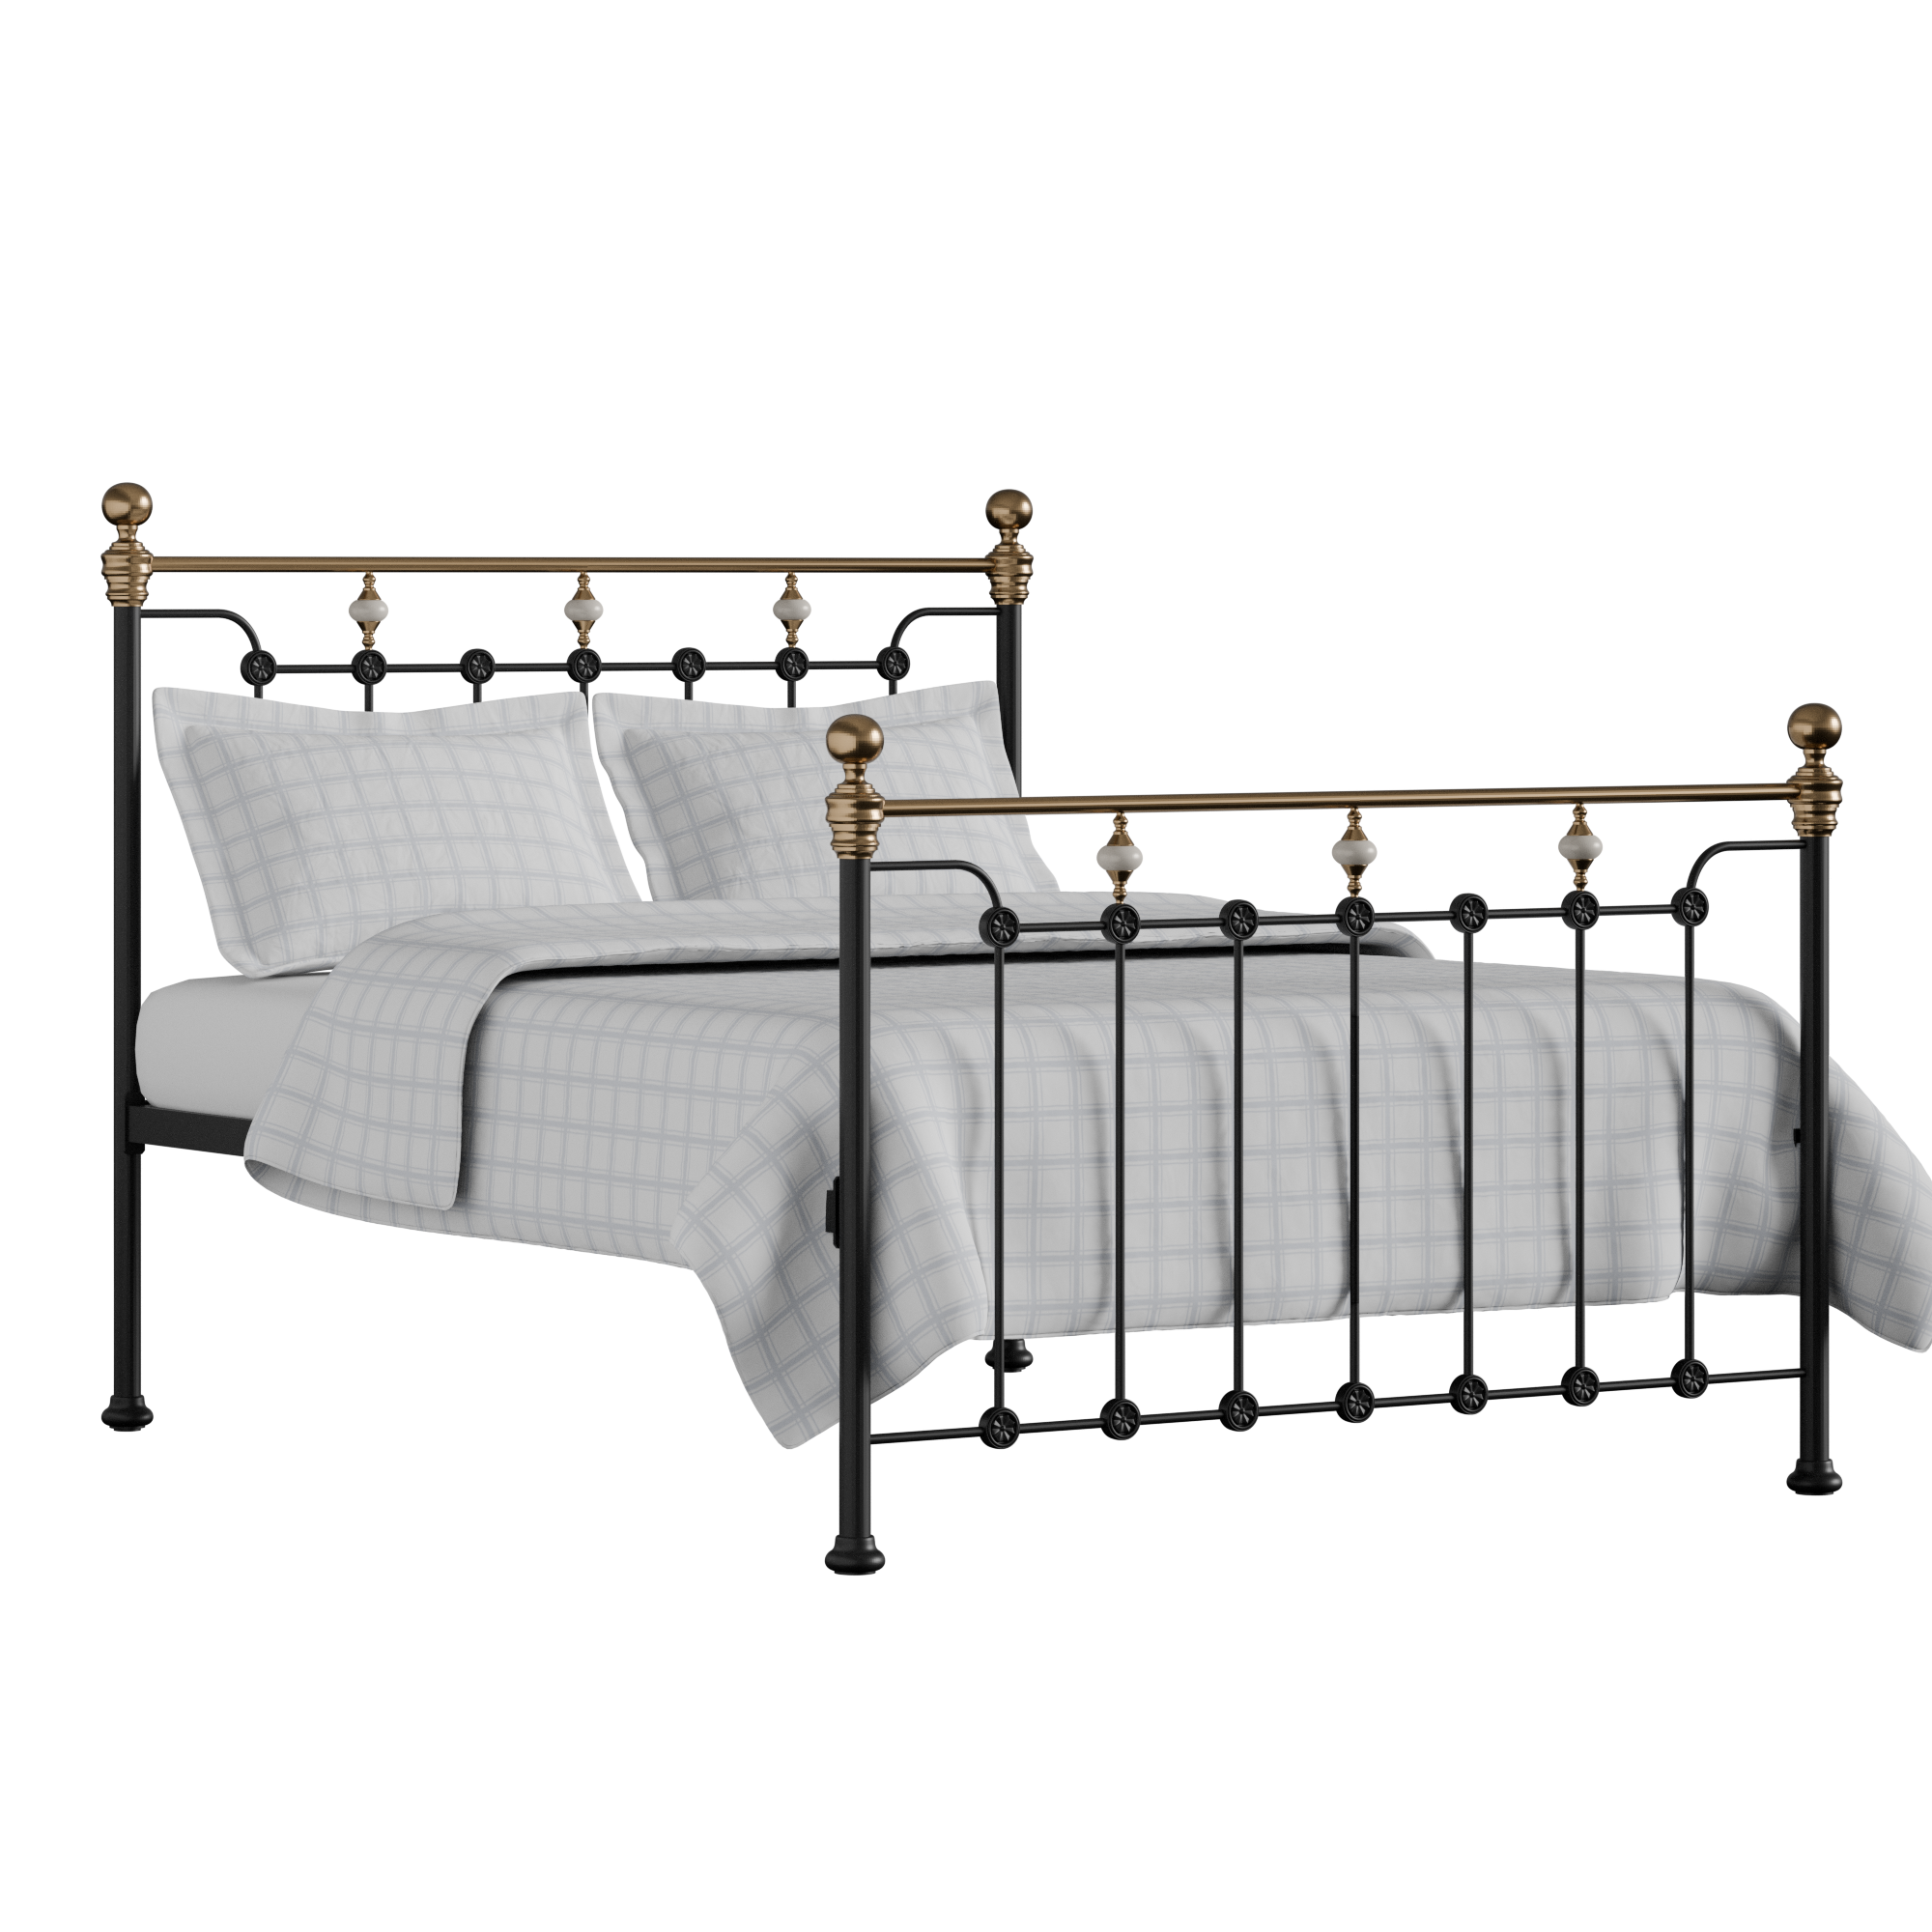 Glenholm iron/metal bed in black with Juno mattress